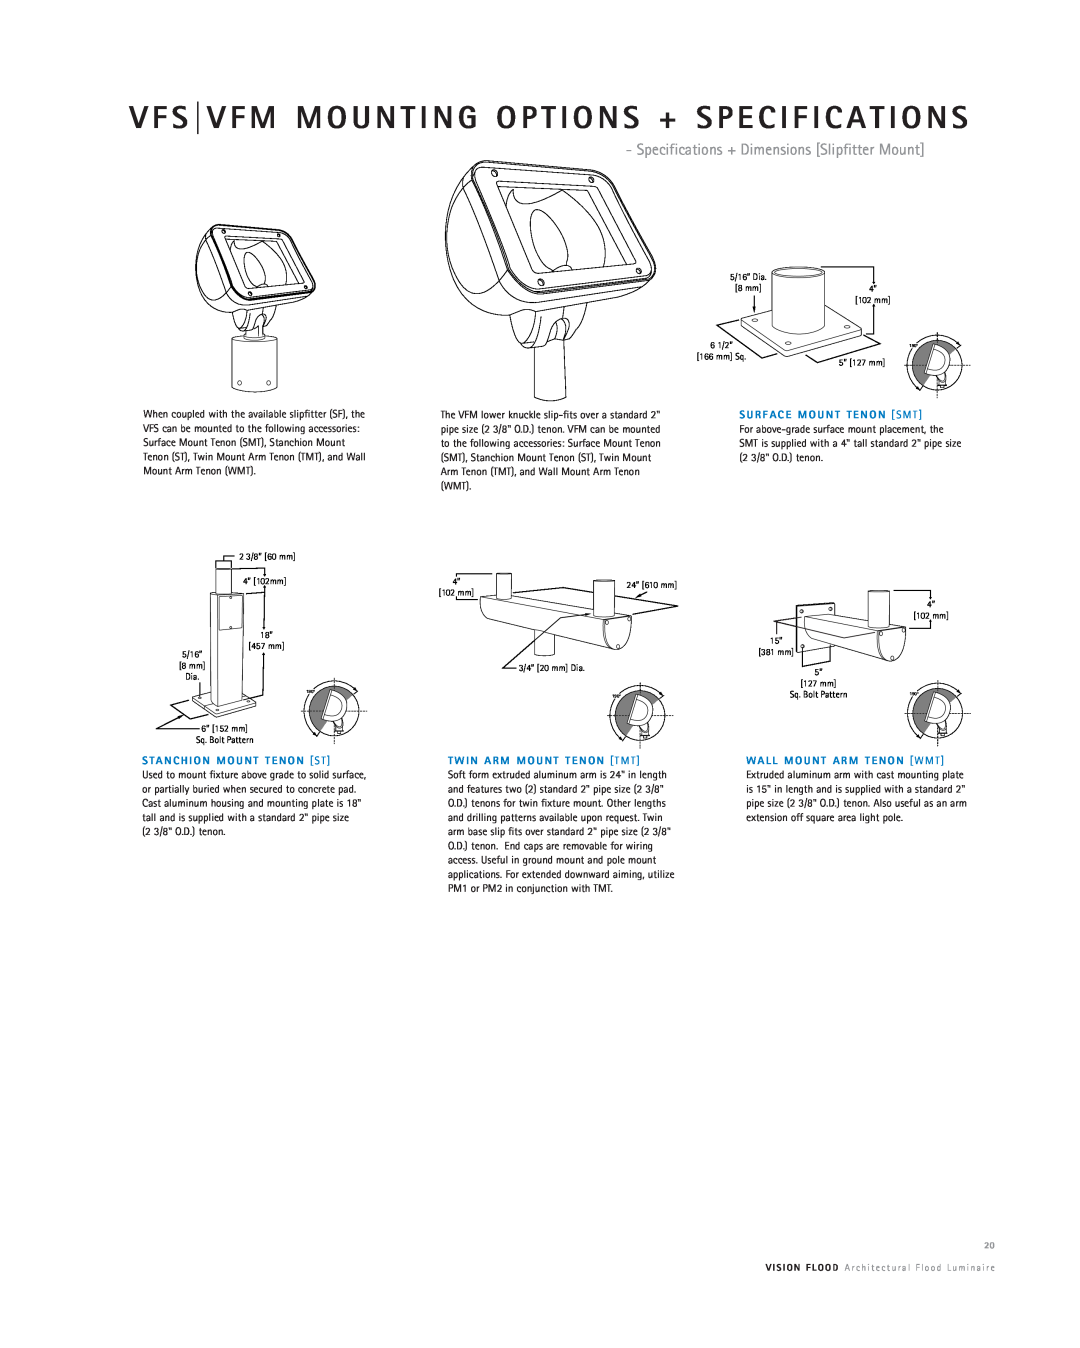 Cooper Lighting Vision Flood manual Specifications + Dimensions Slipfitter Mount, S U R F A C E M O U N T T E N O N S M T 